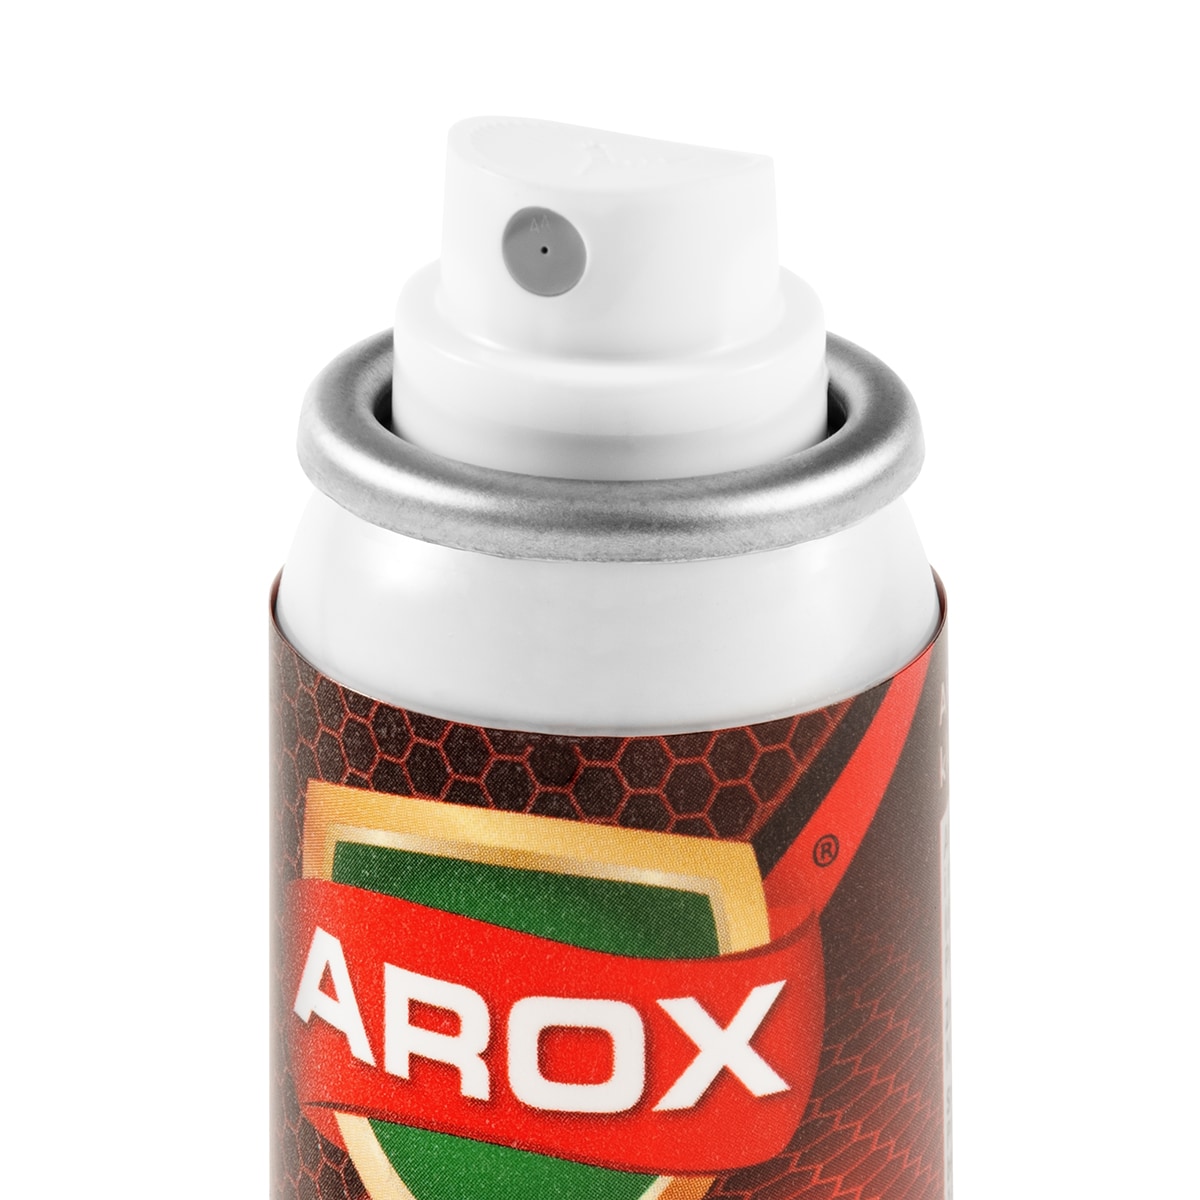 Repelent Arox DEET spray na komary, kleszcze i meszki 90 ml